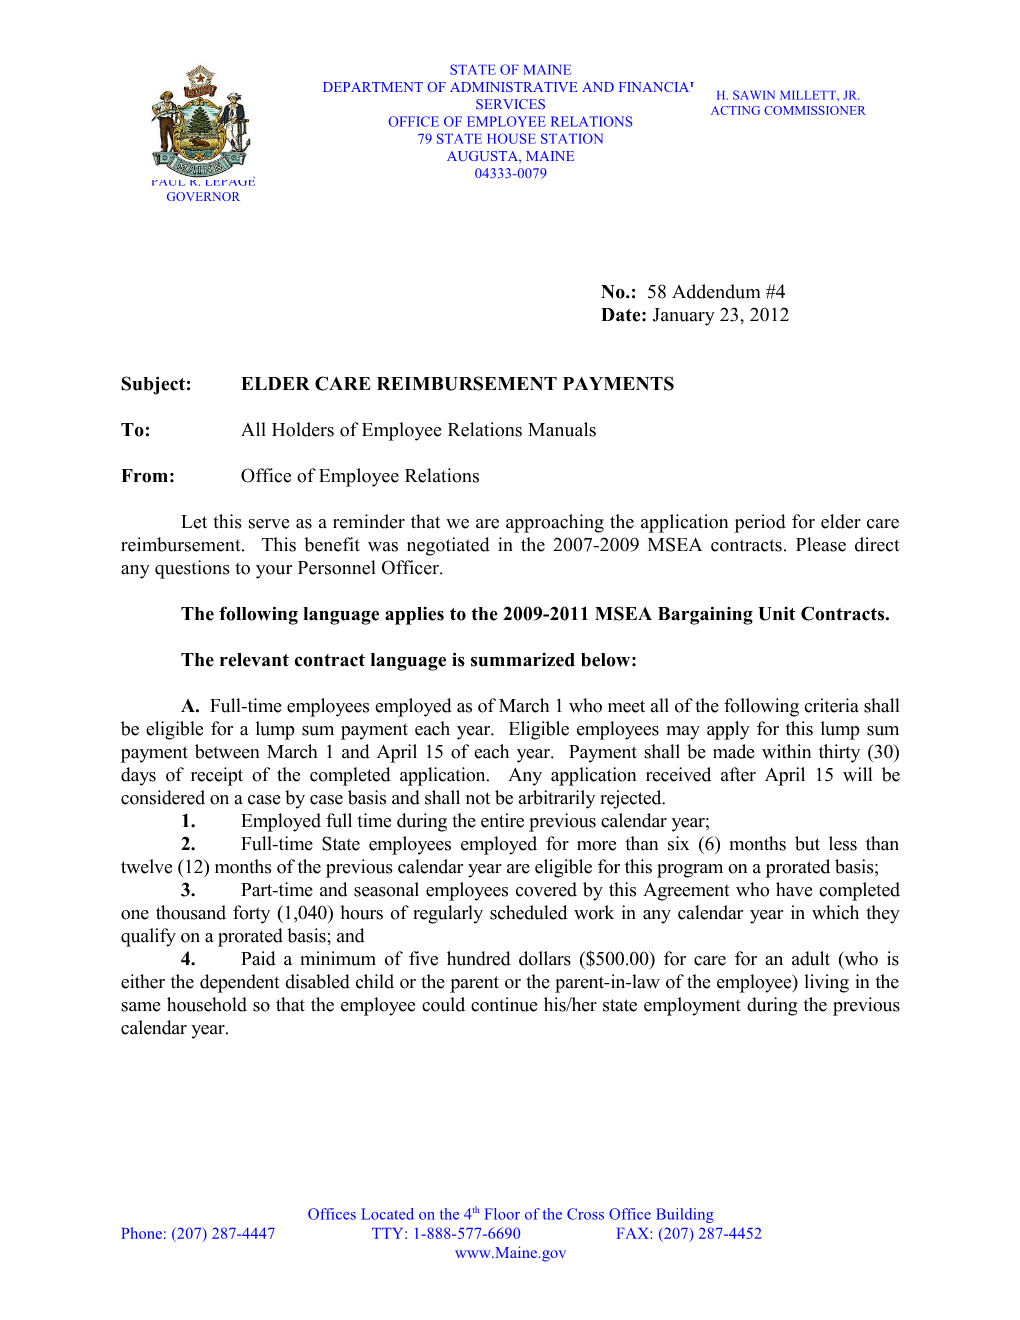 Subject:ELDER CARE REIMBURSEMENT PAYMENTS